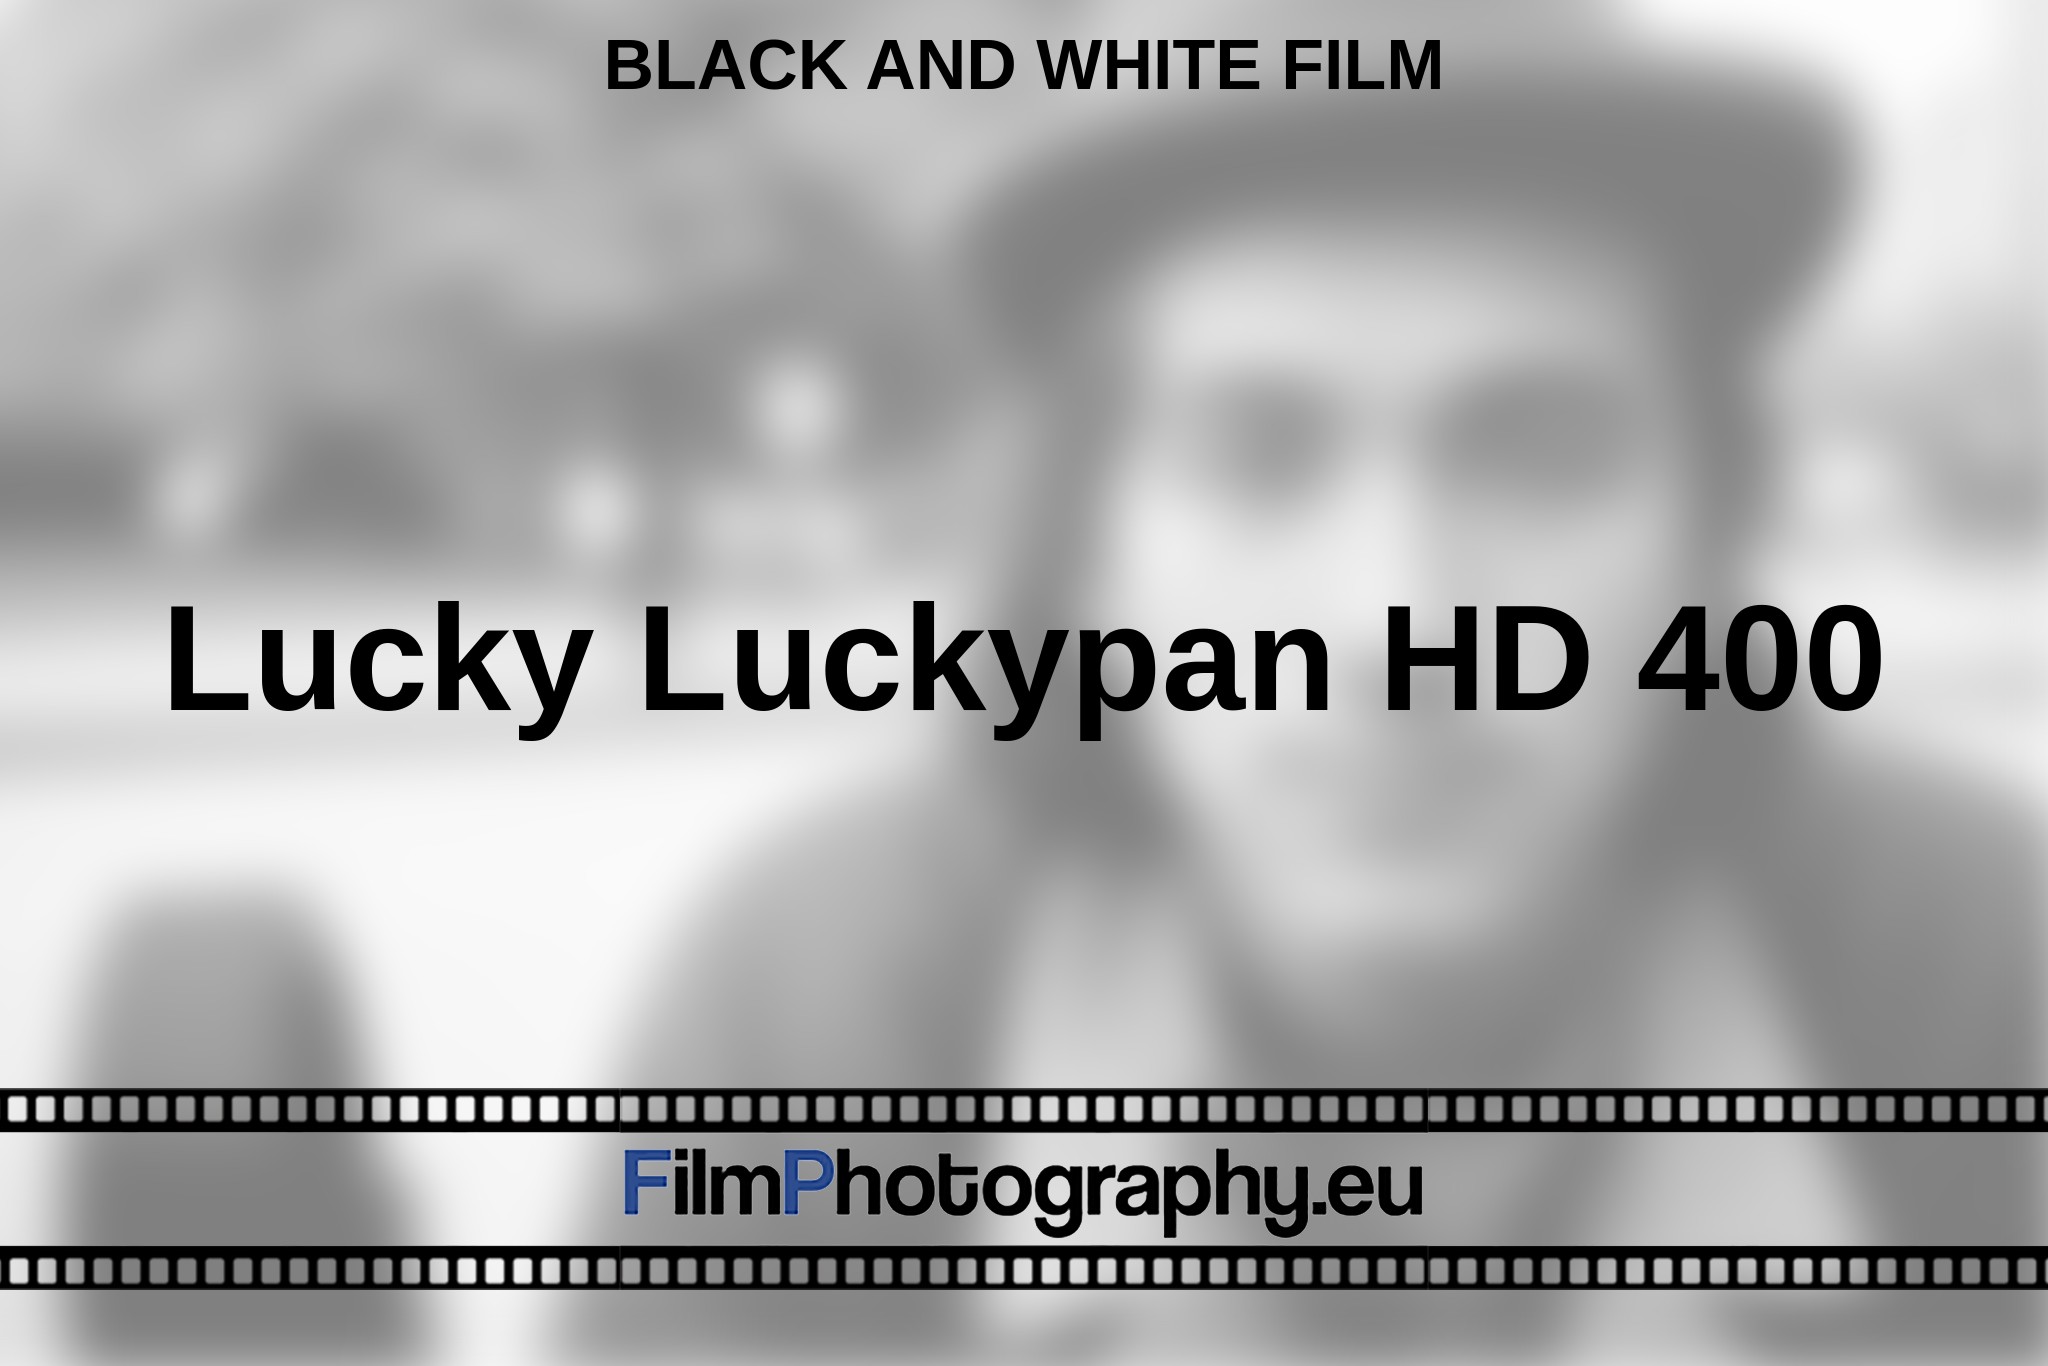 lucky-luckypan-hd-400-black-and-white-film-en-bnv.jpg